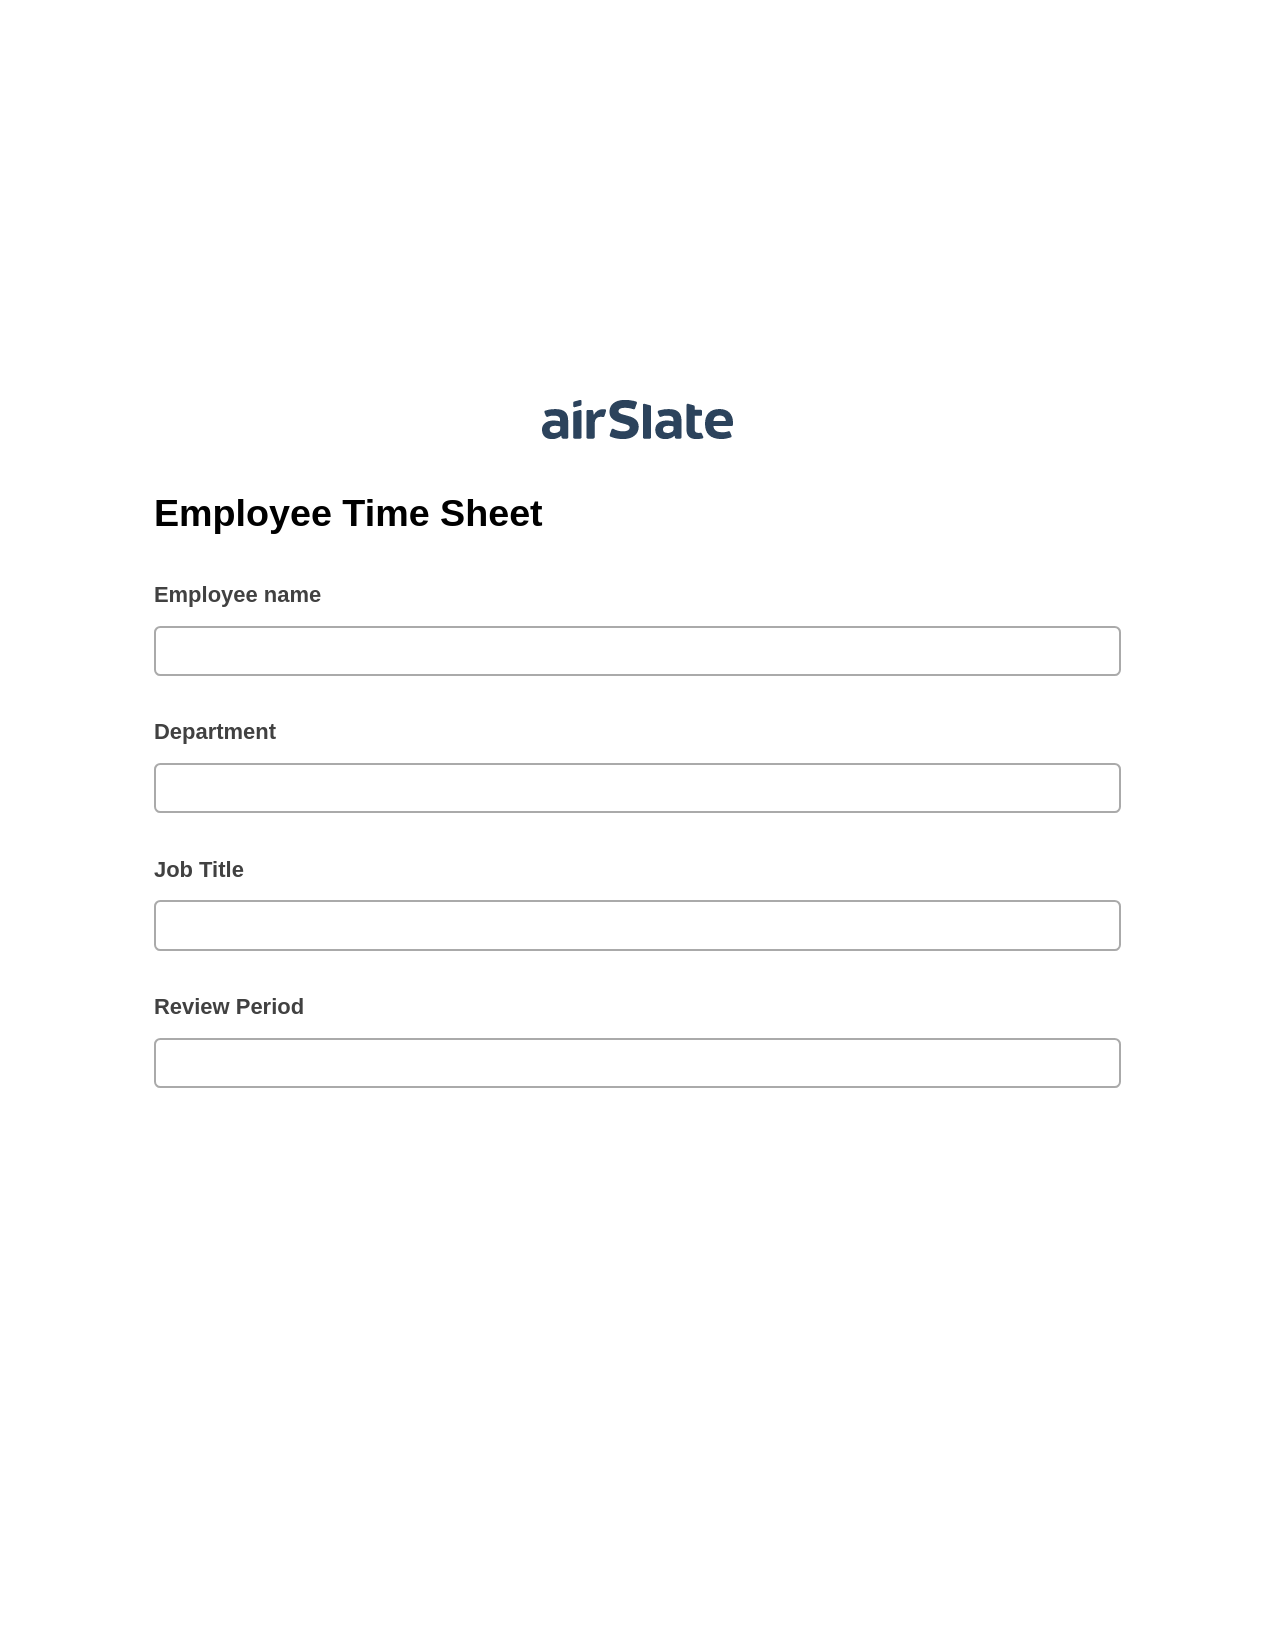 Multirole Employee Time Sheet Pre-fill from CSV File Bot, Add Tags to Slate Bot, Slack Notification Postfinish Bot